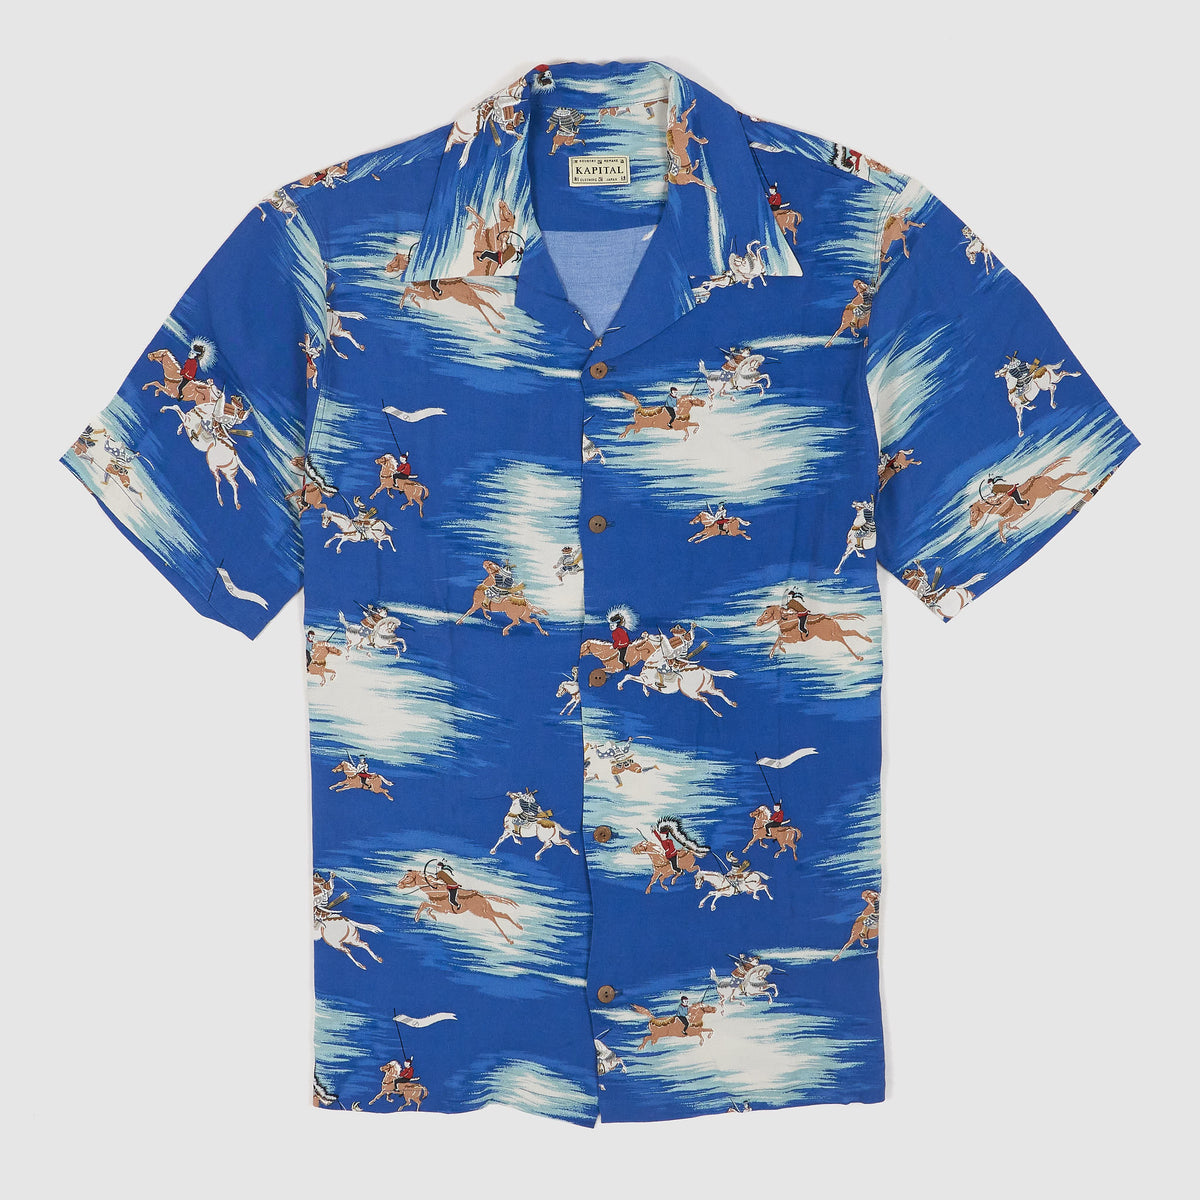 Kapital Aloha Cavalry Shirt